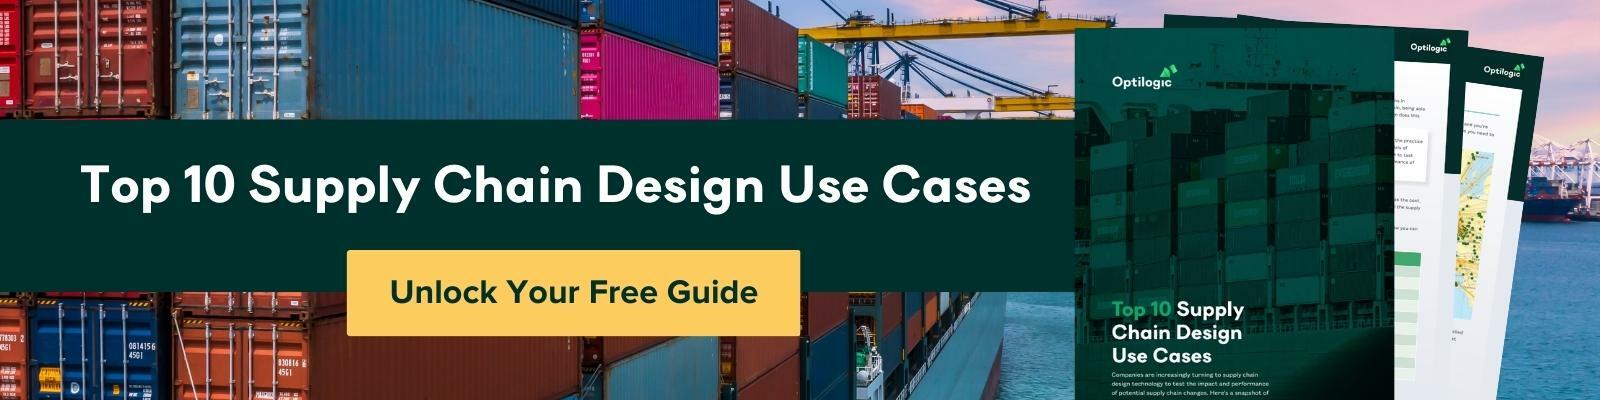 Top 10 Supply Chain Design Use Cases cta